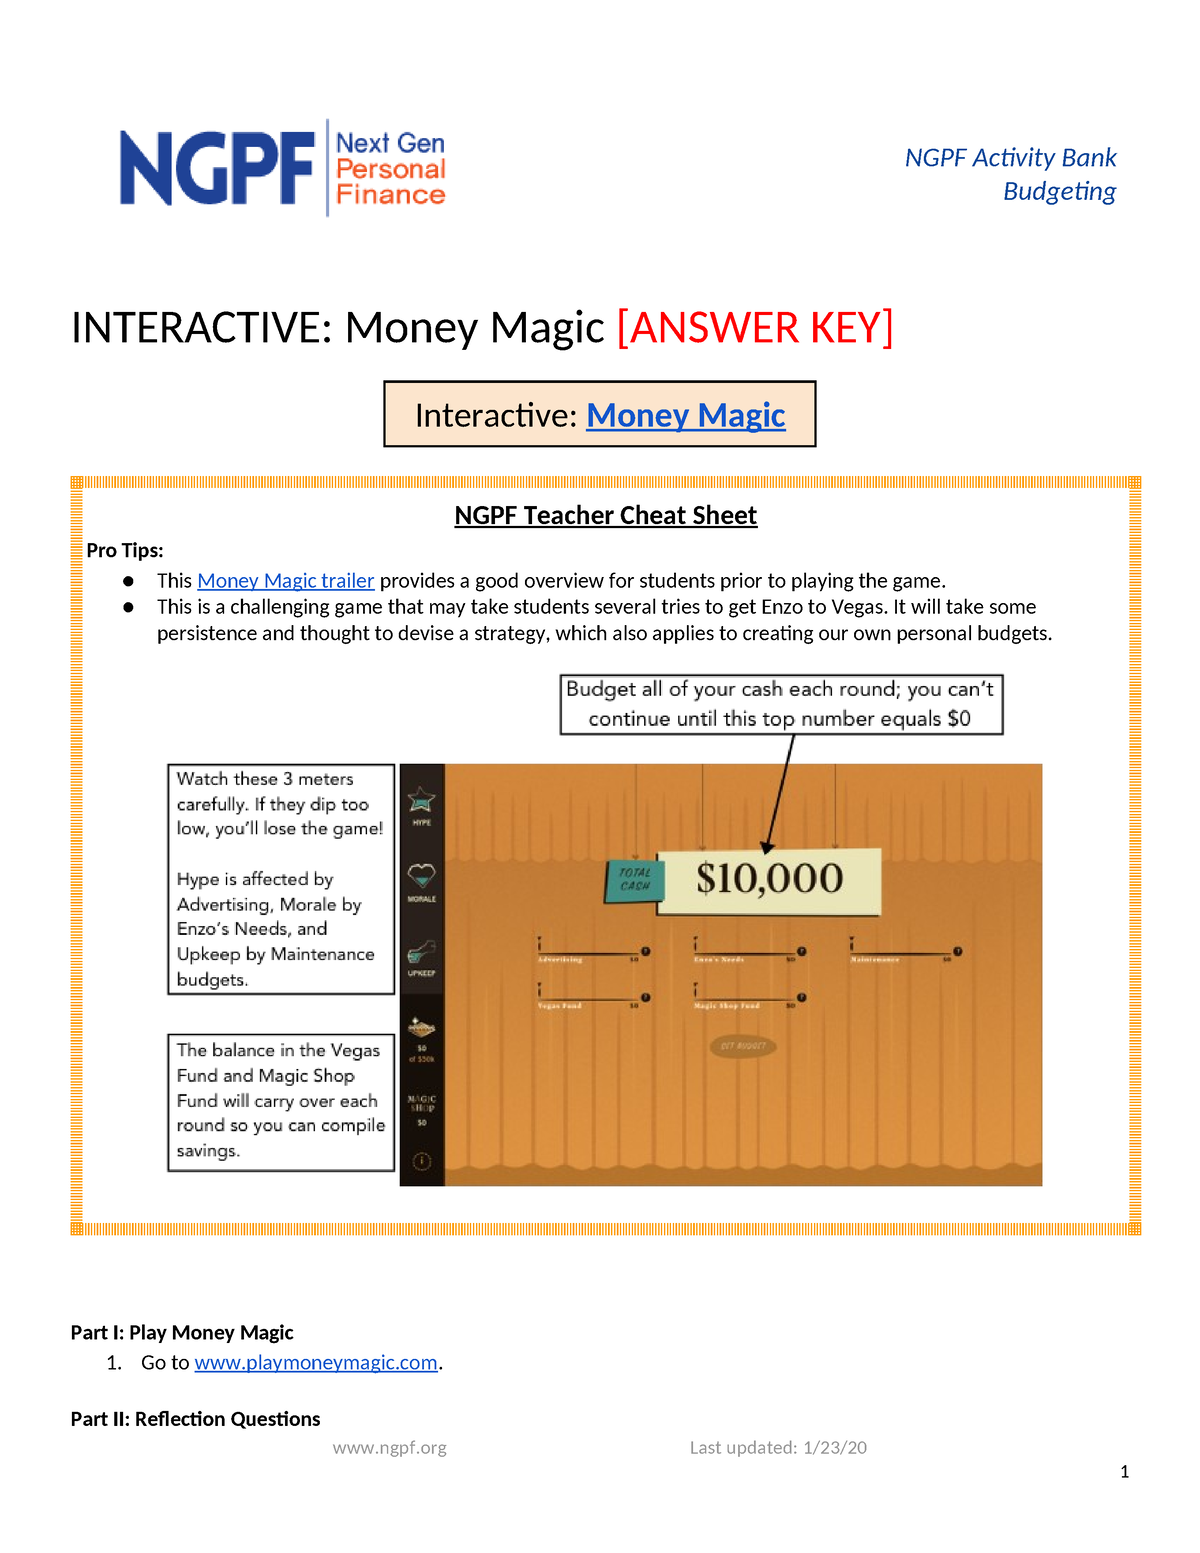 ngpf case study budgeting answer key pdf